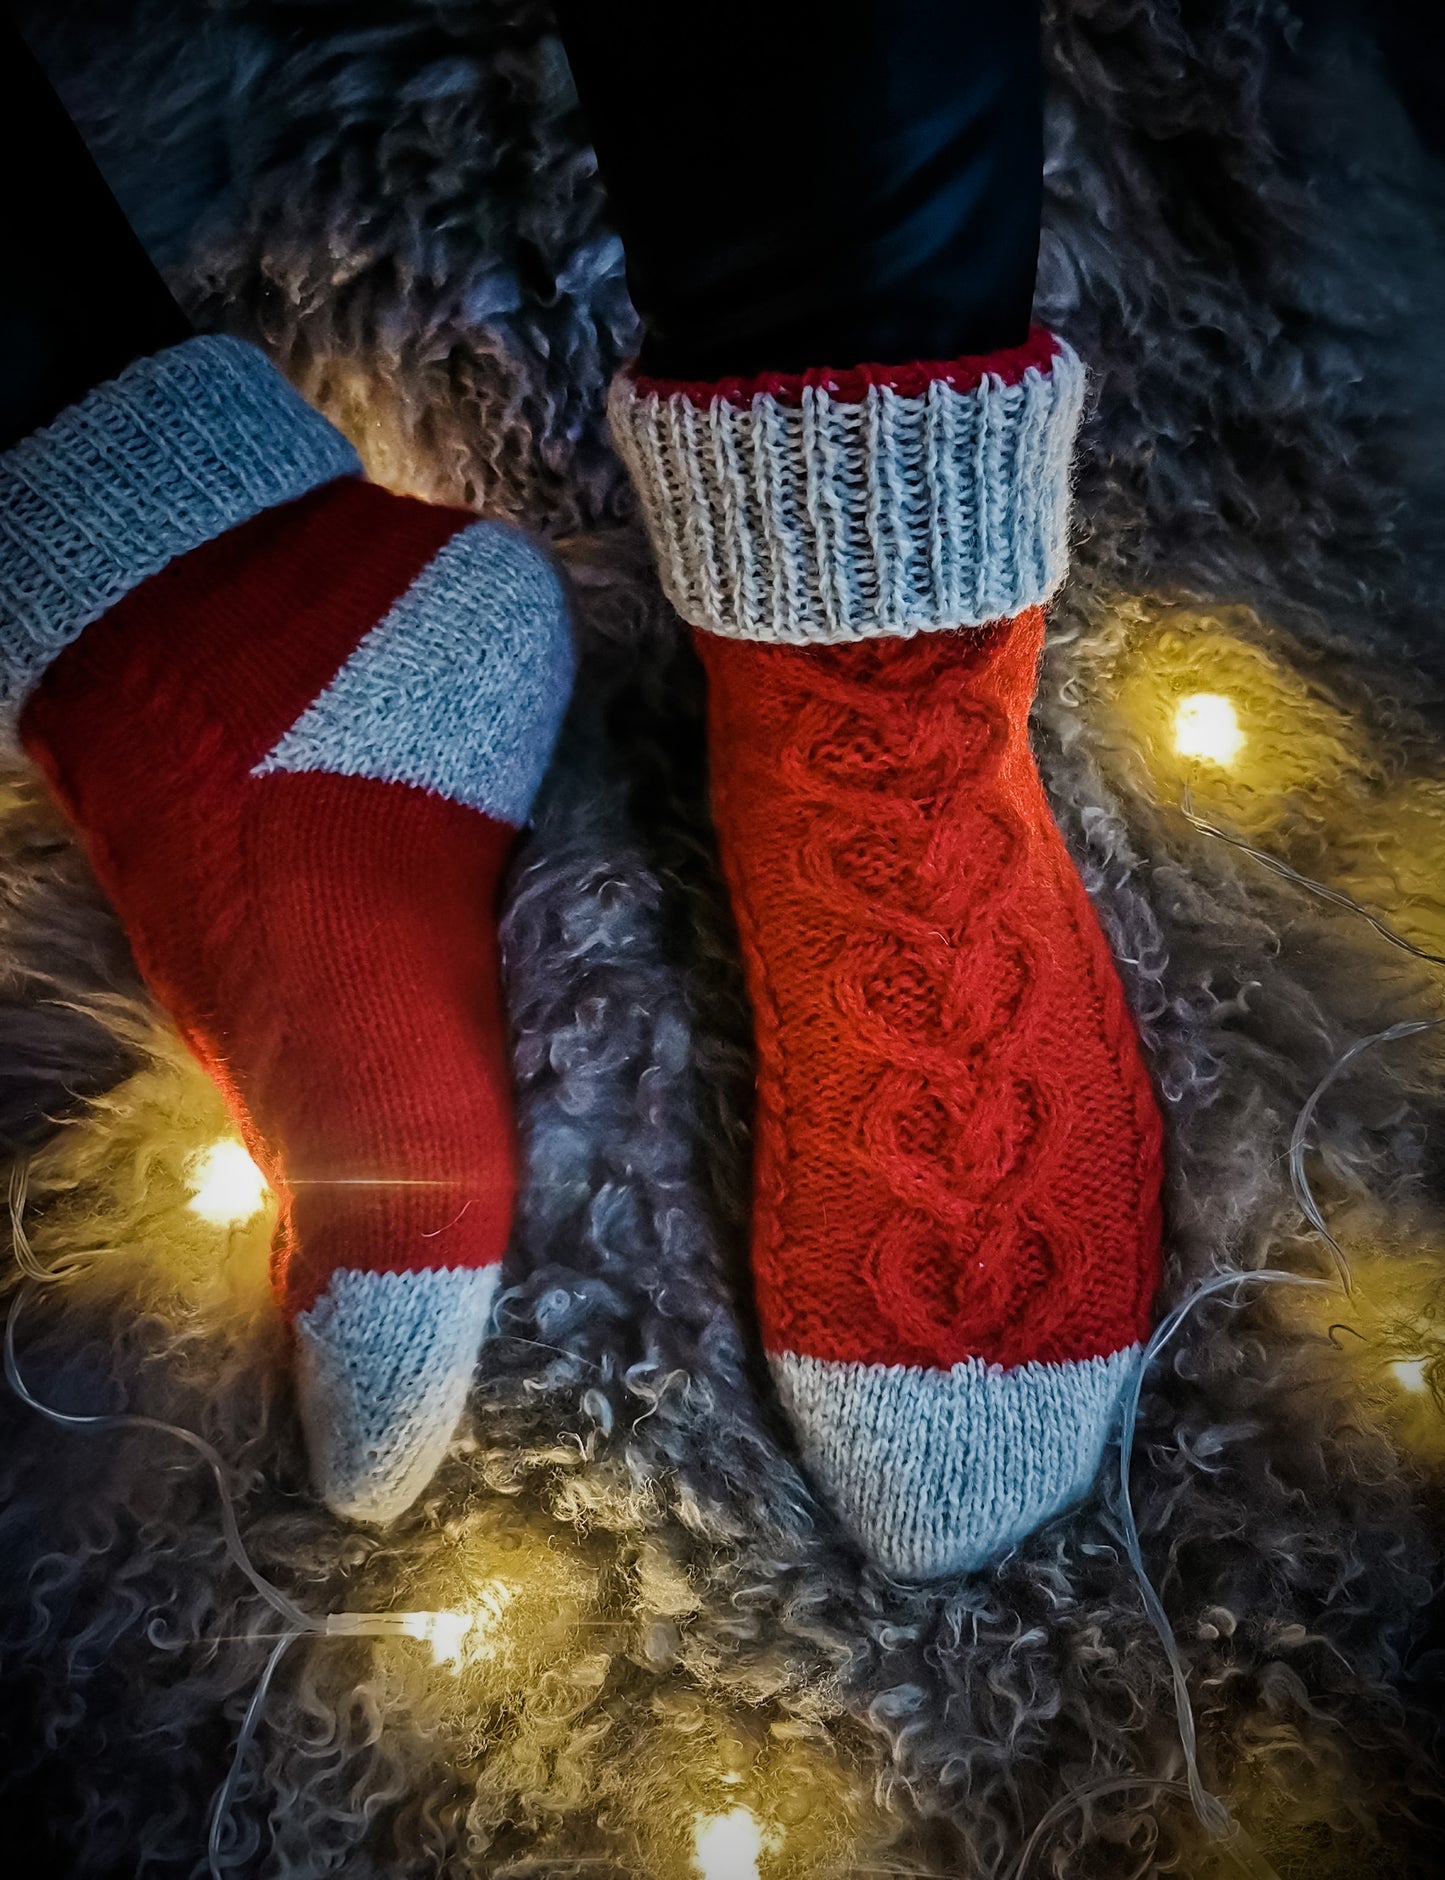 Christmas Edition Yarn Kit  of Love is in the Air Socks  -   Pattern in English/Norwegian - Norwegian design